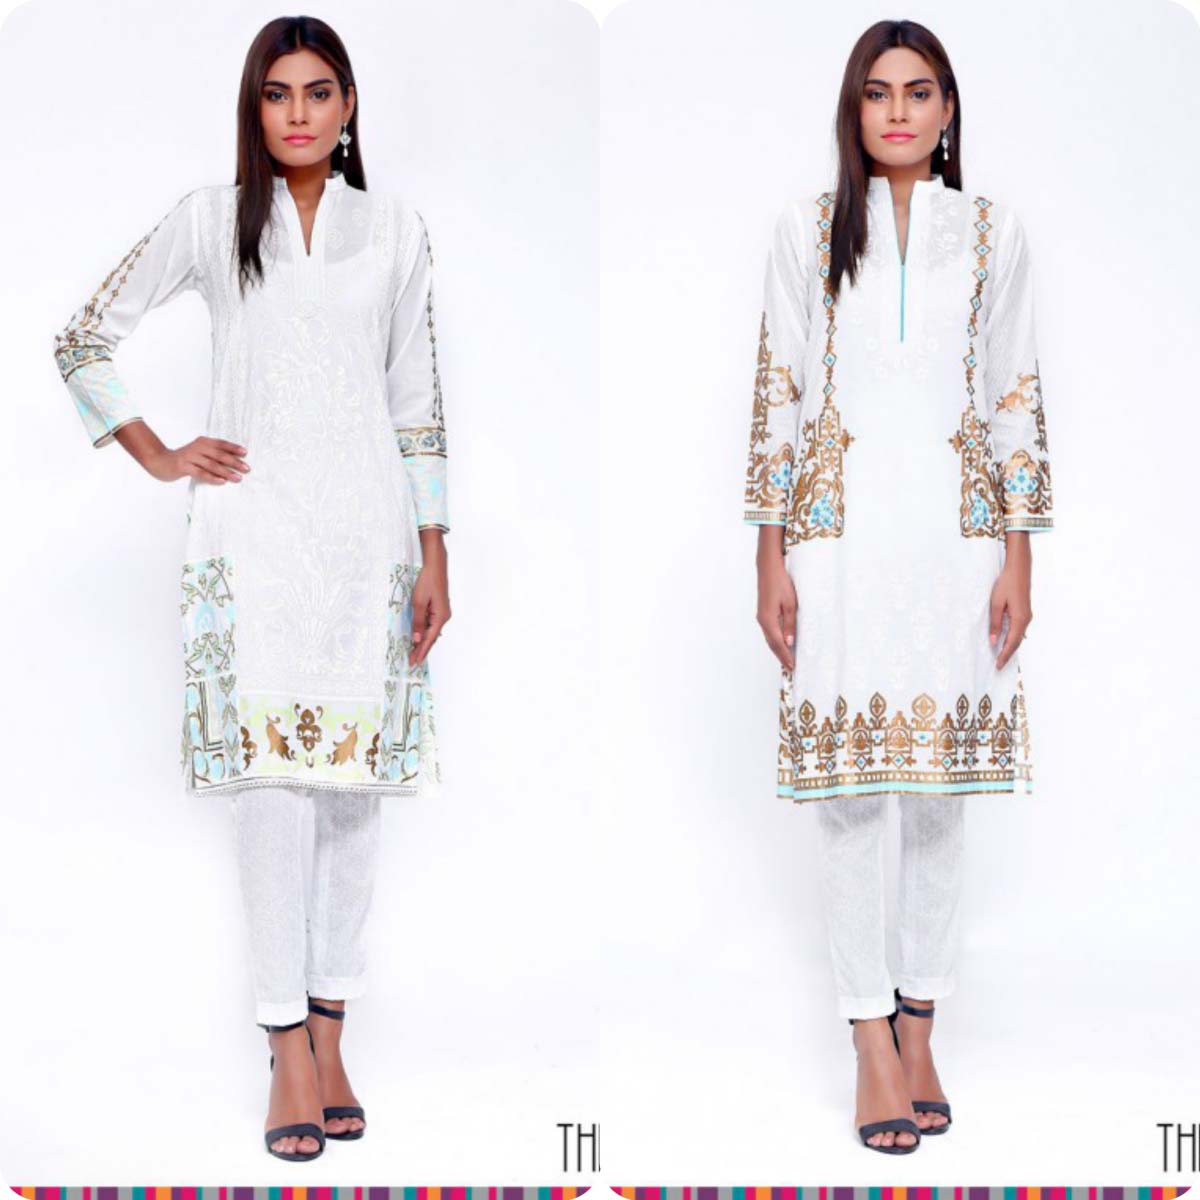 Stylish Embroidered Eid KurtisTunics for Girls By THREDZ 2016-2016 Complete Look-Book (11)